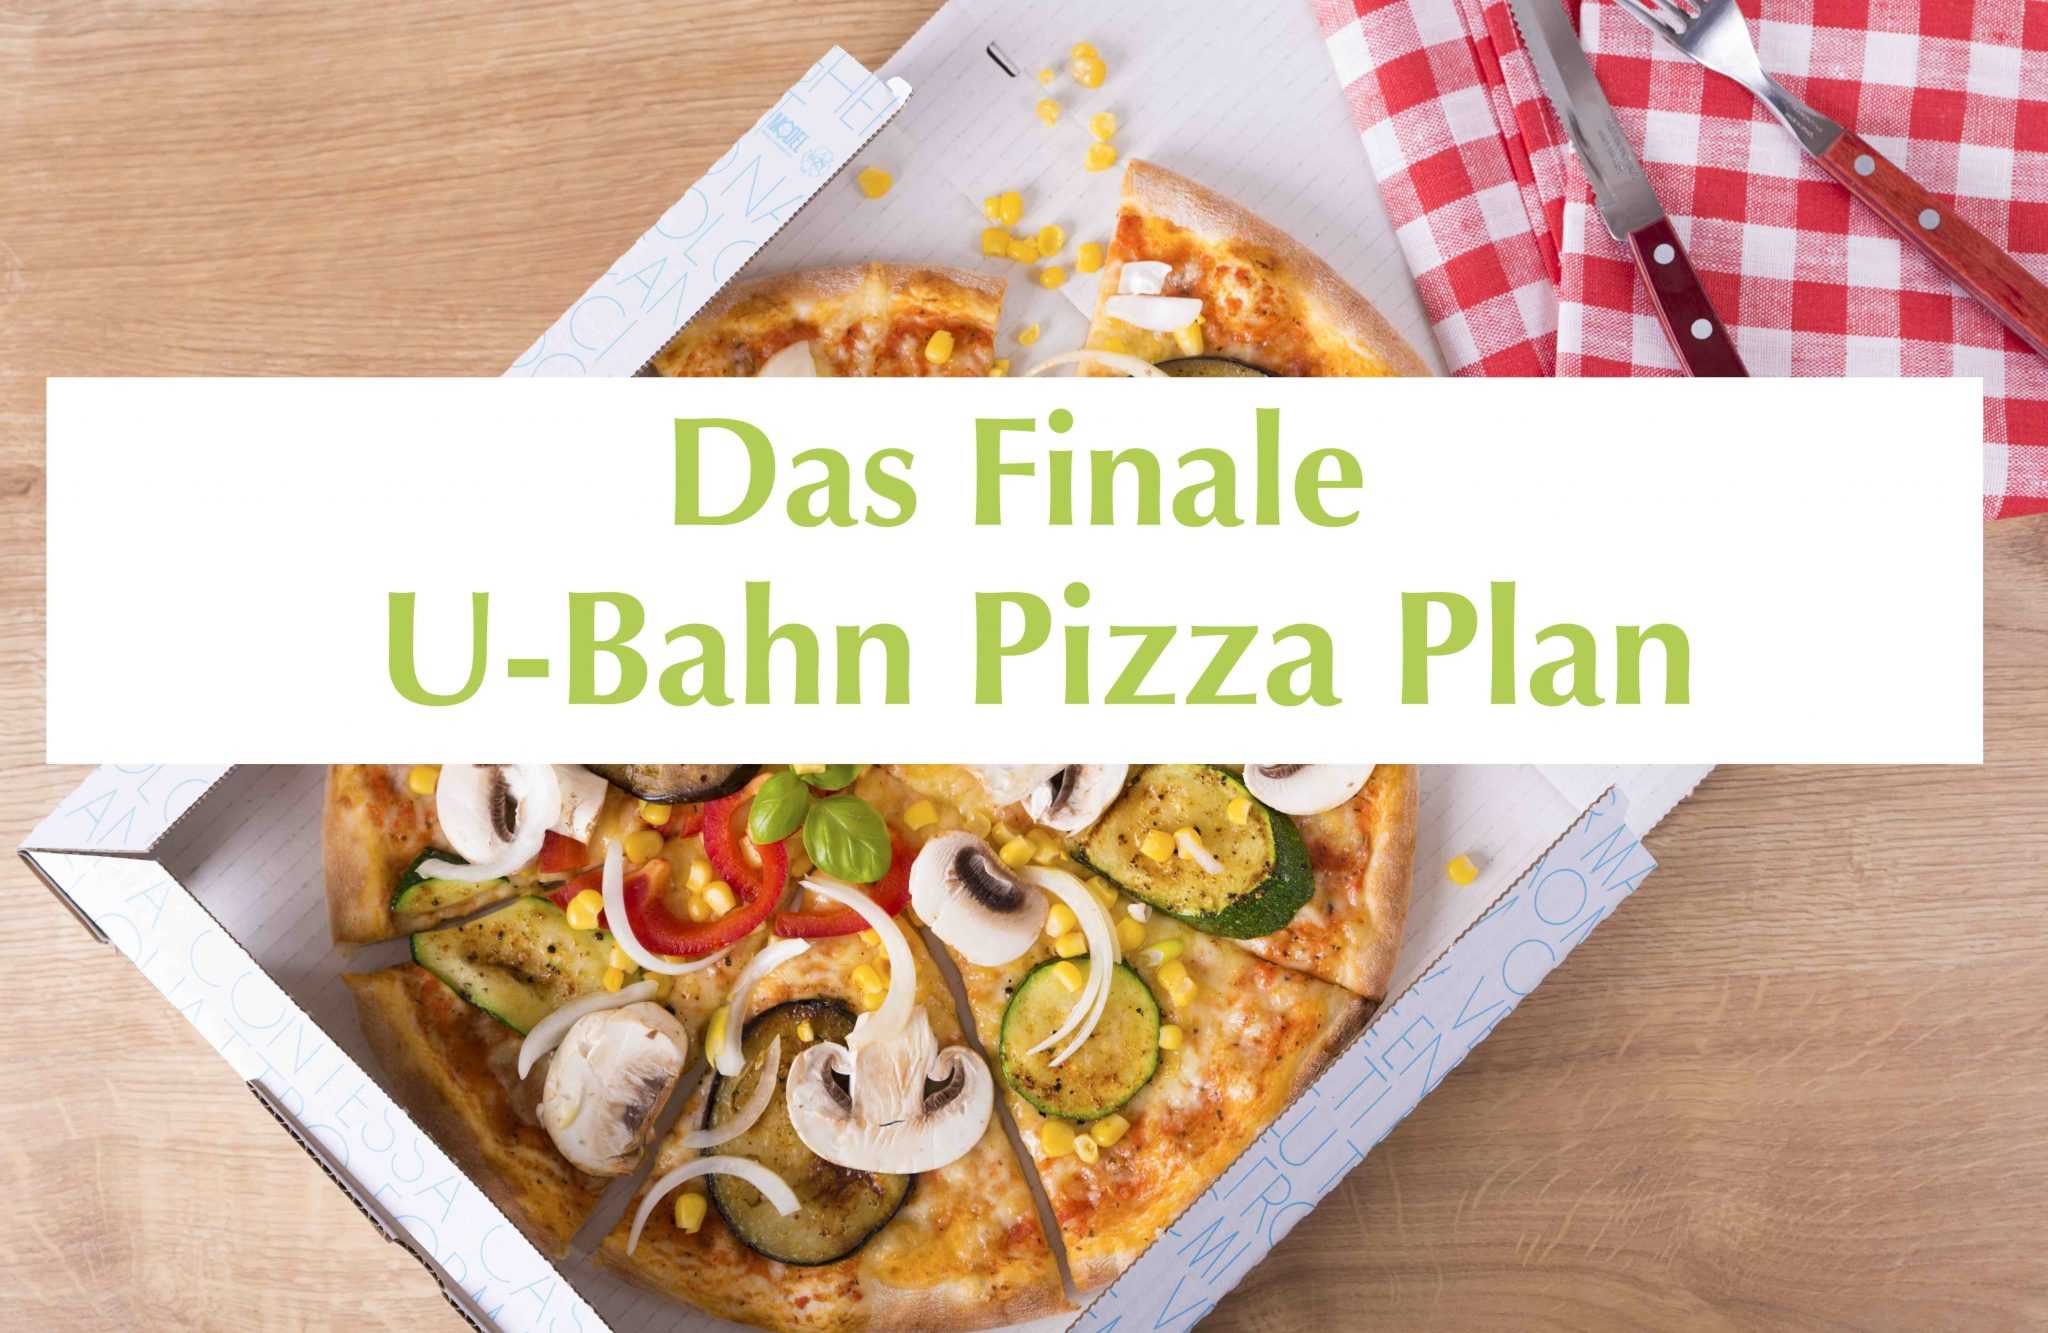 Das Finale U-Bahn Pizza Plan